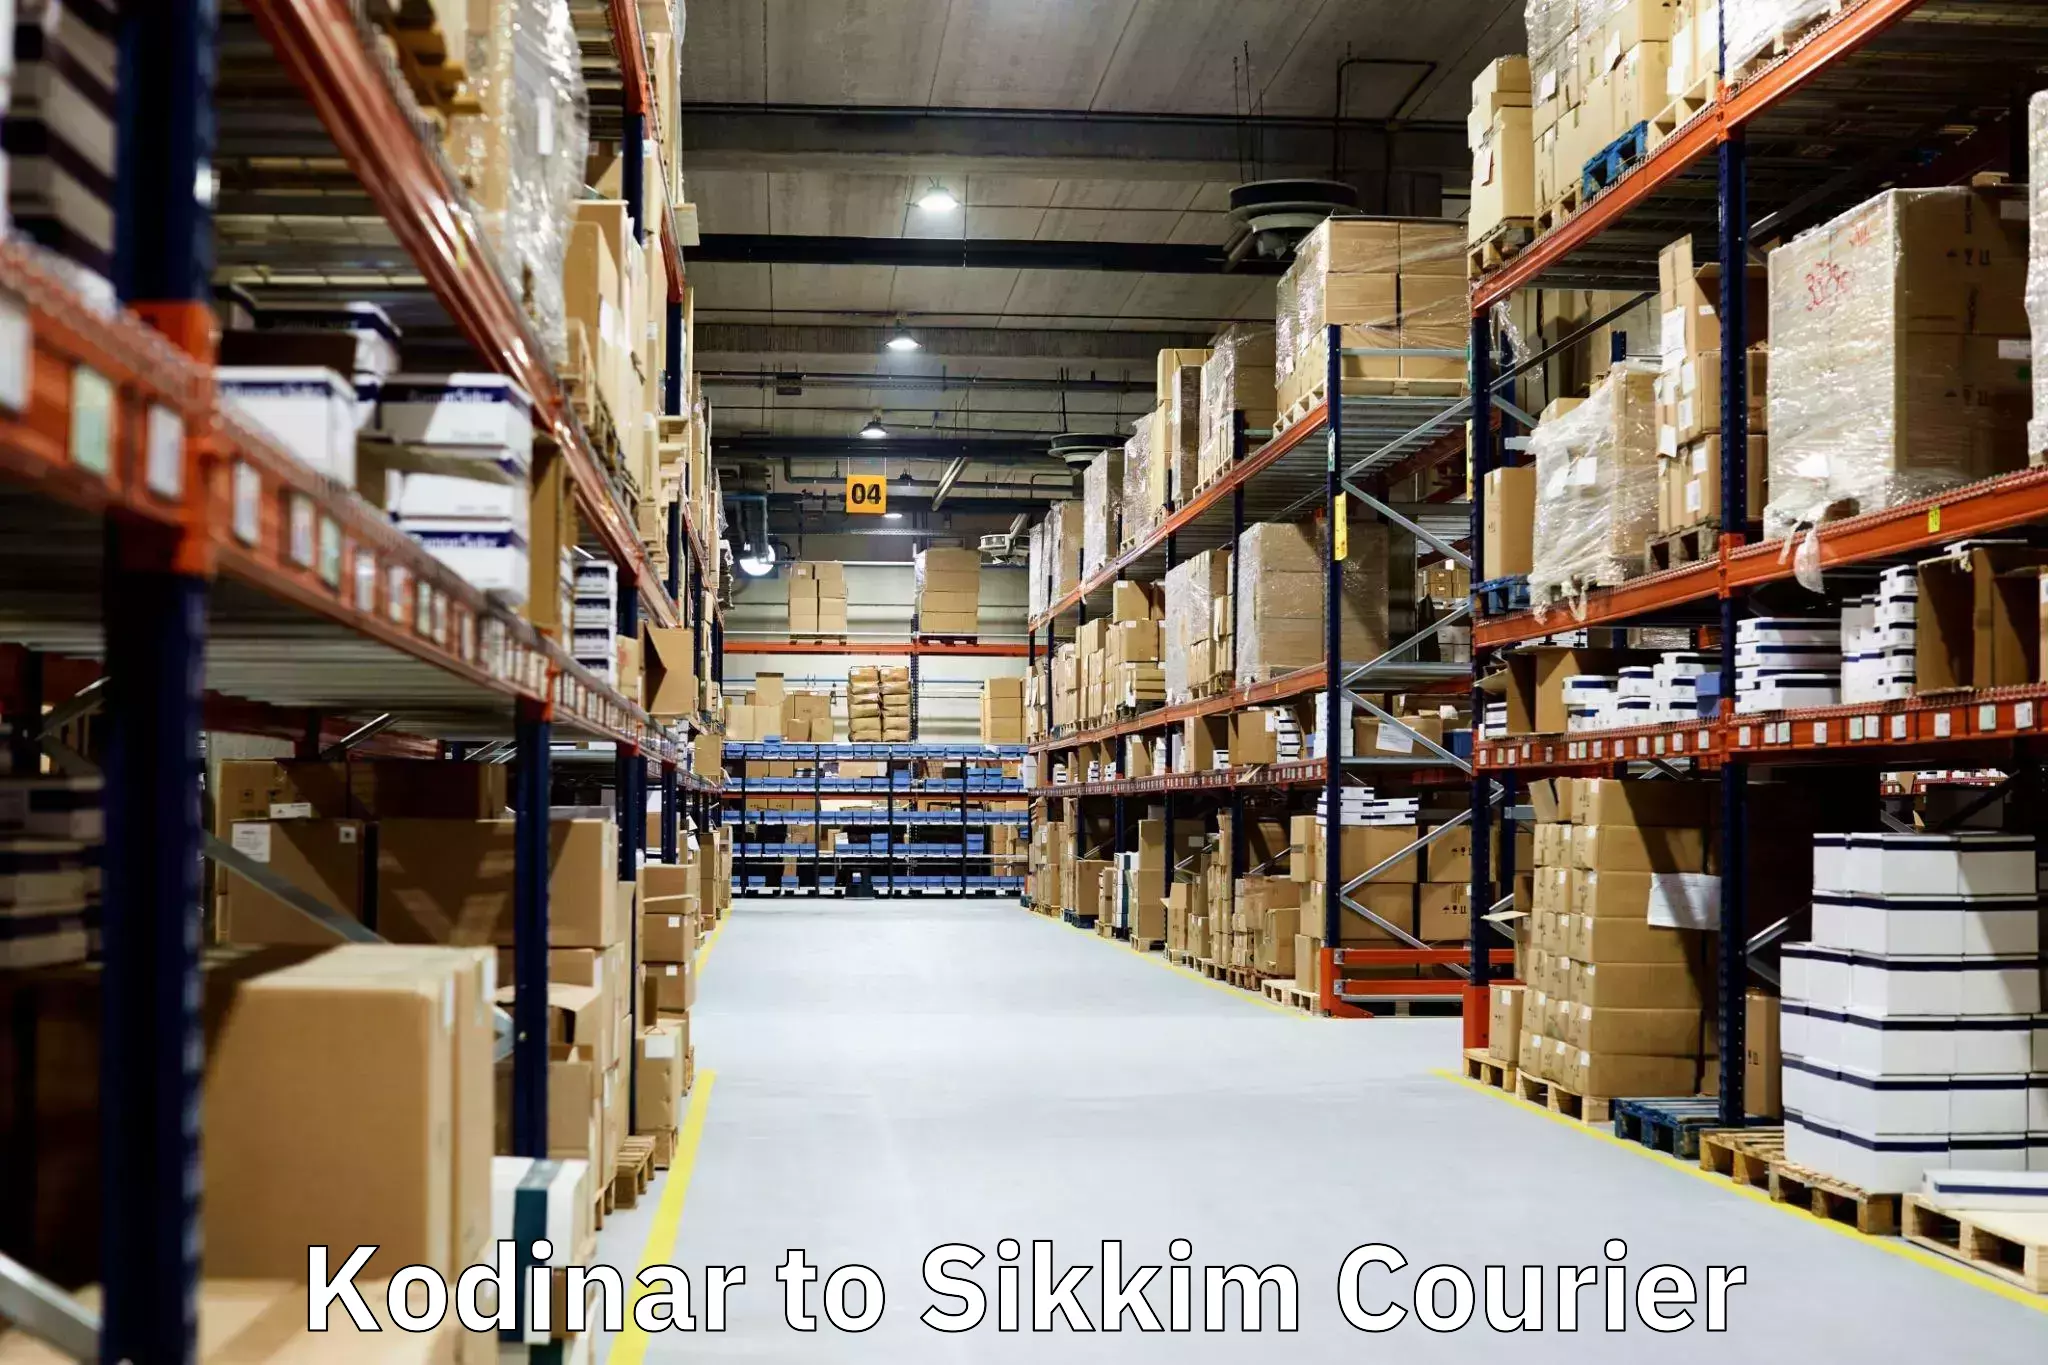 Professional moving company Kodinar to Pelling